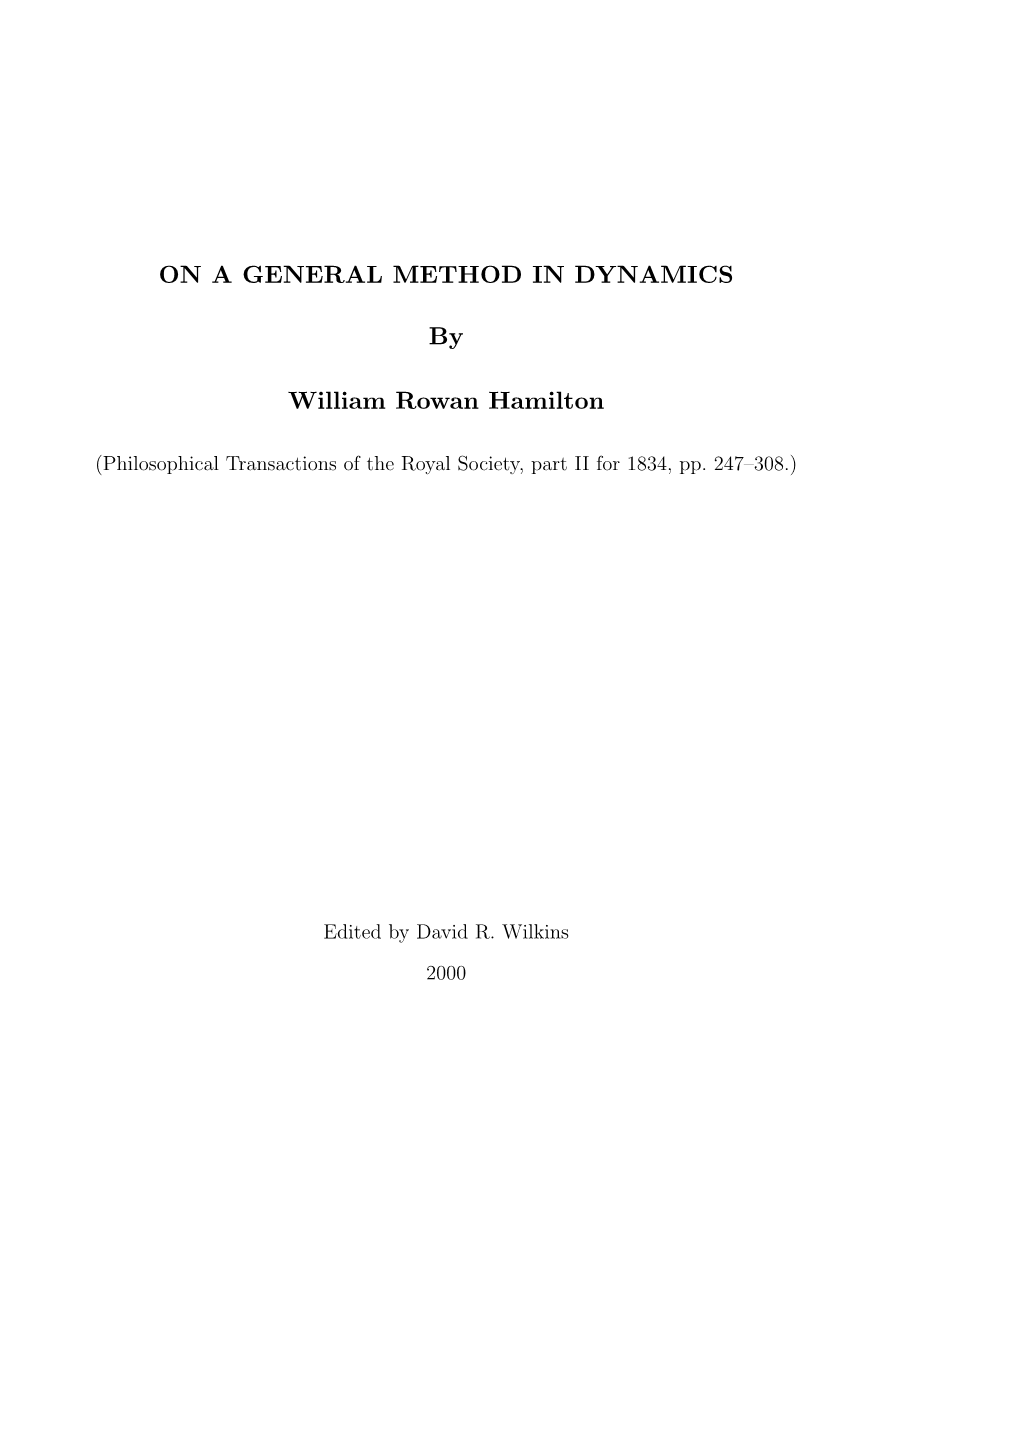 ON a GENERAL METHOD in DYNAMICS by William Rowan